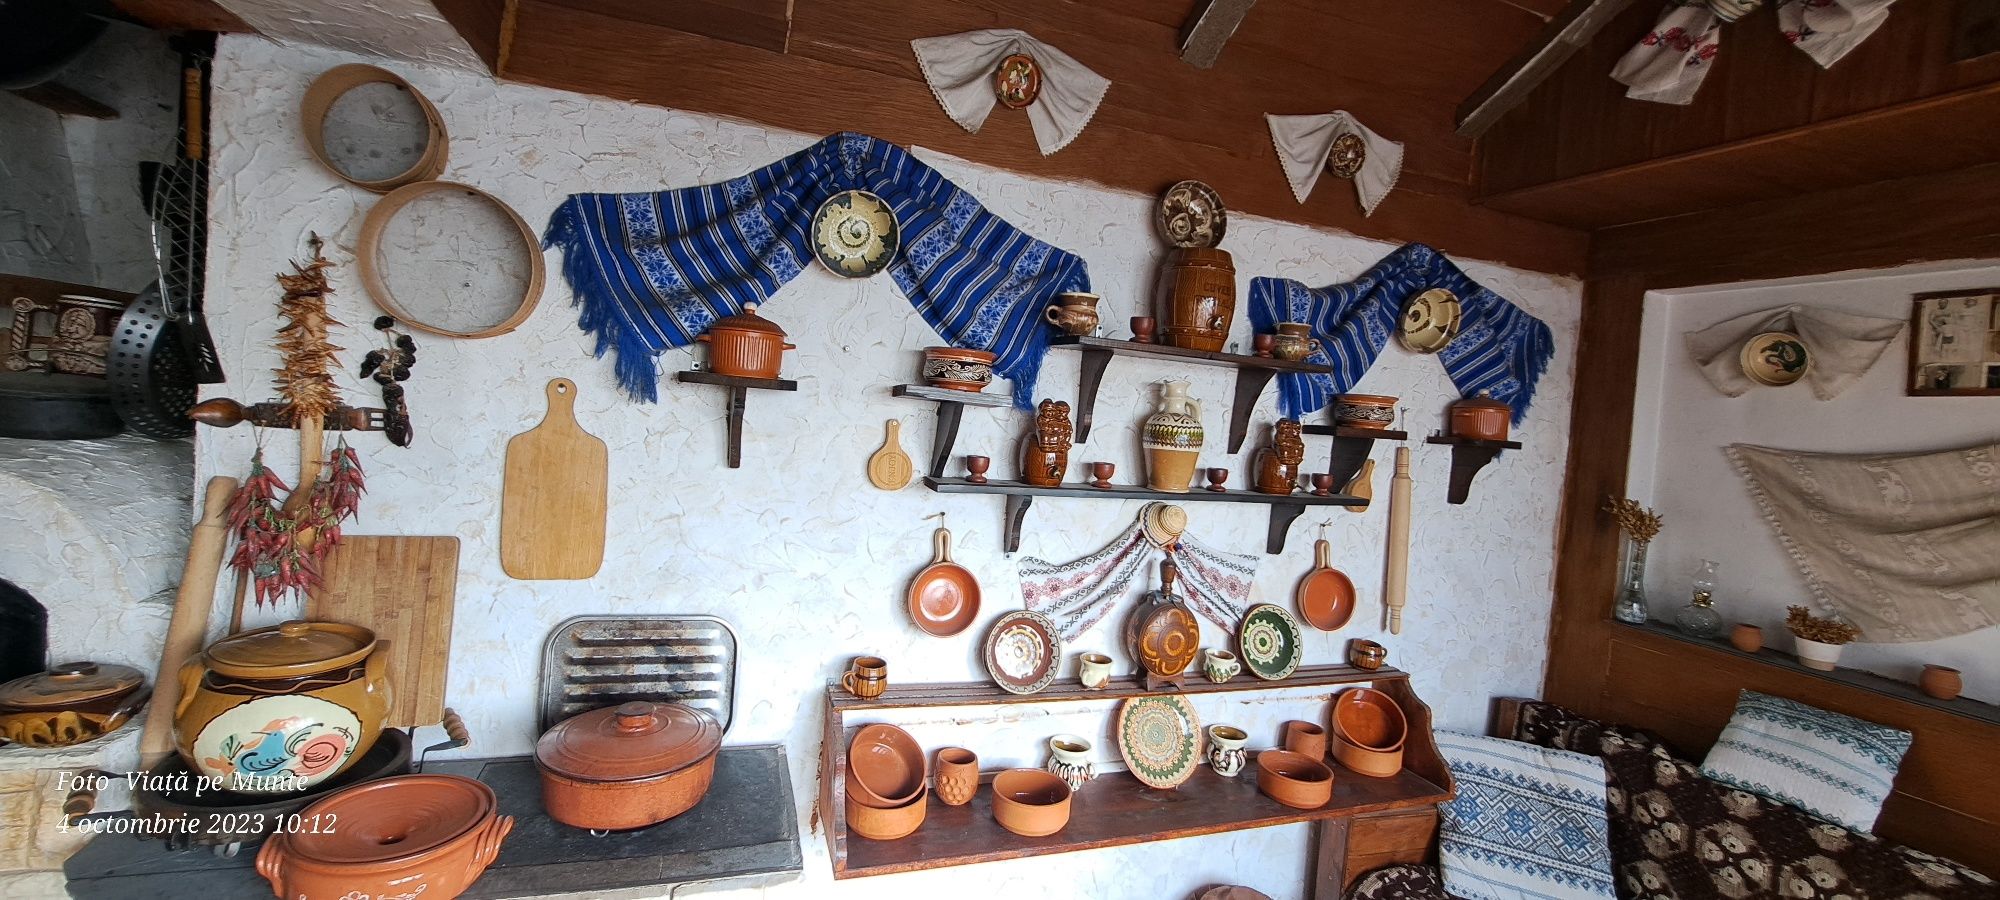 Vând obiecte traditionale românesti